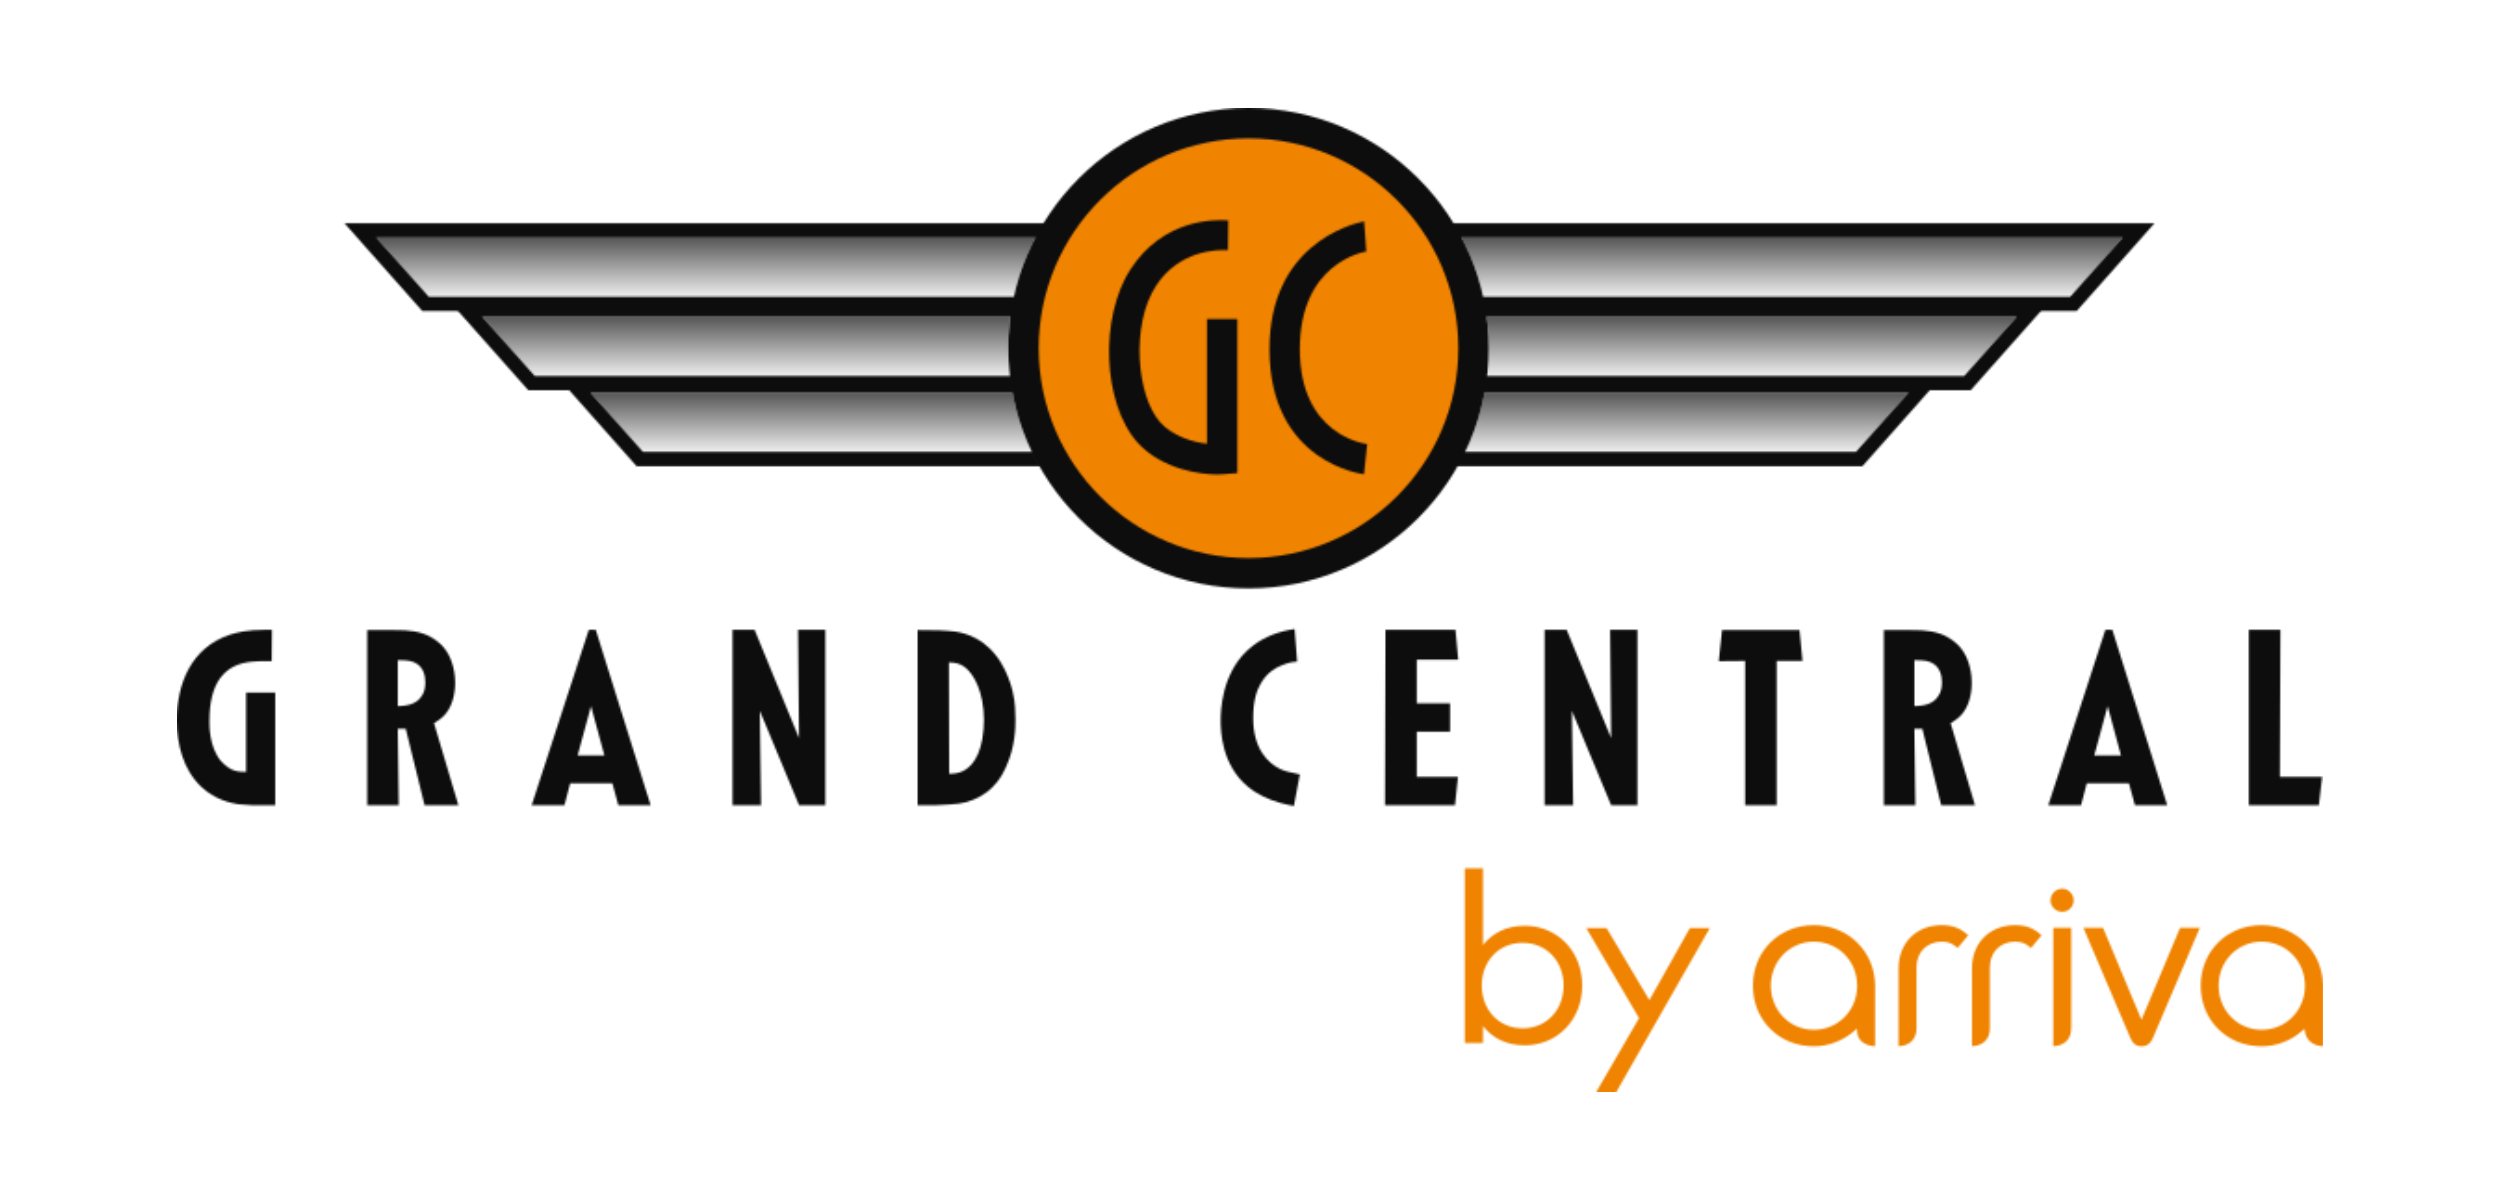 Grand Central P&S logo (2500 x 1200 px)